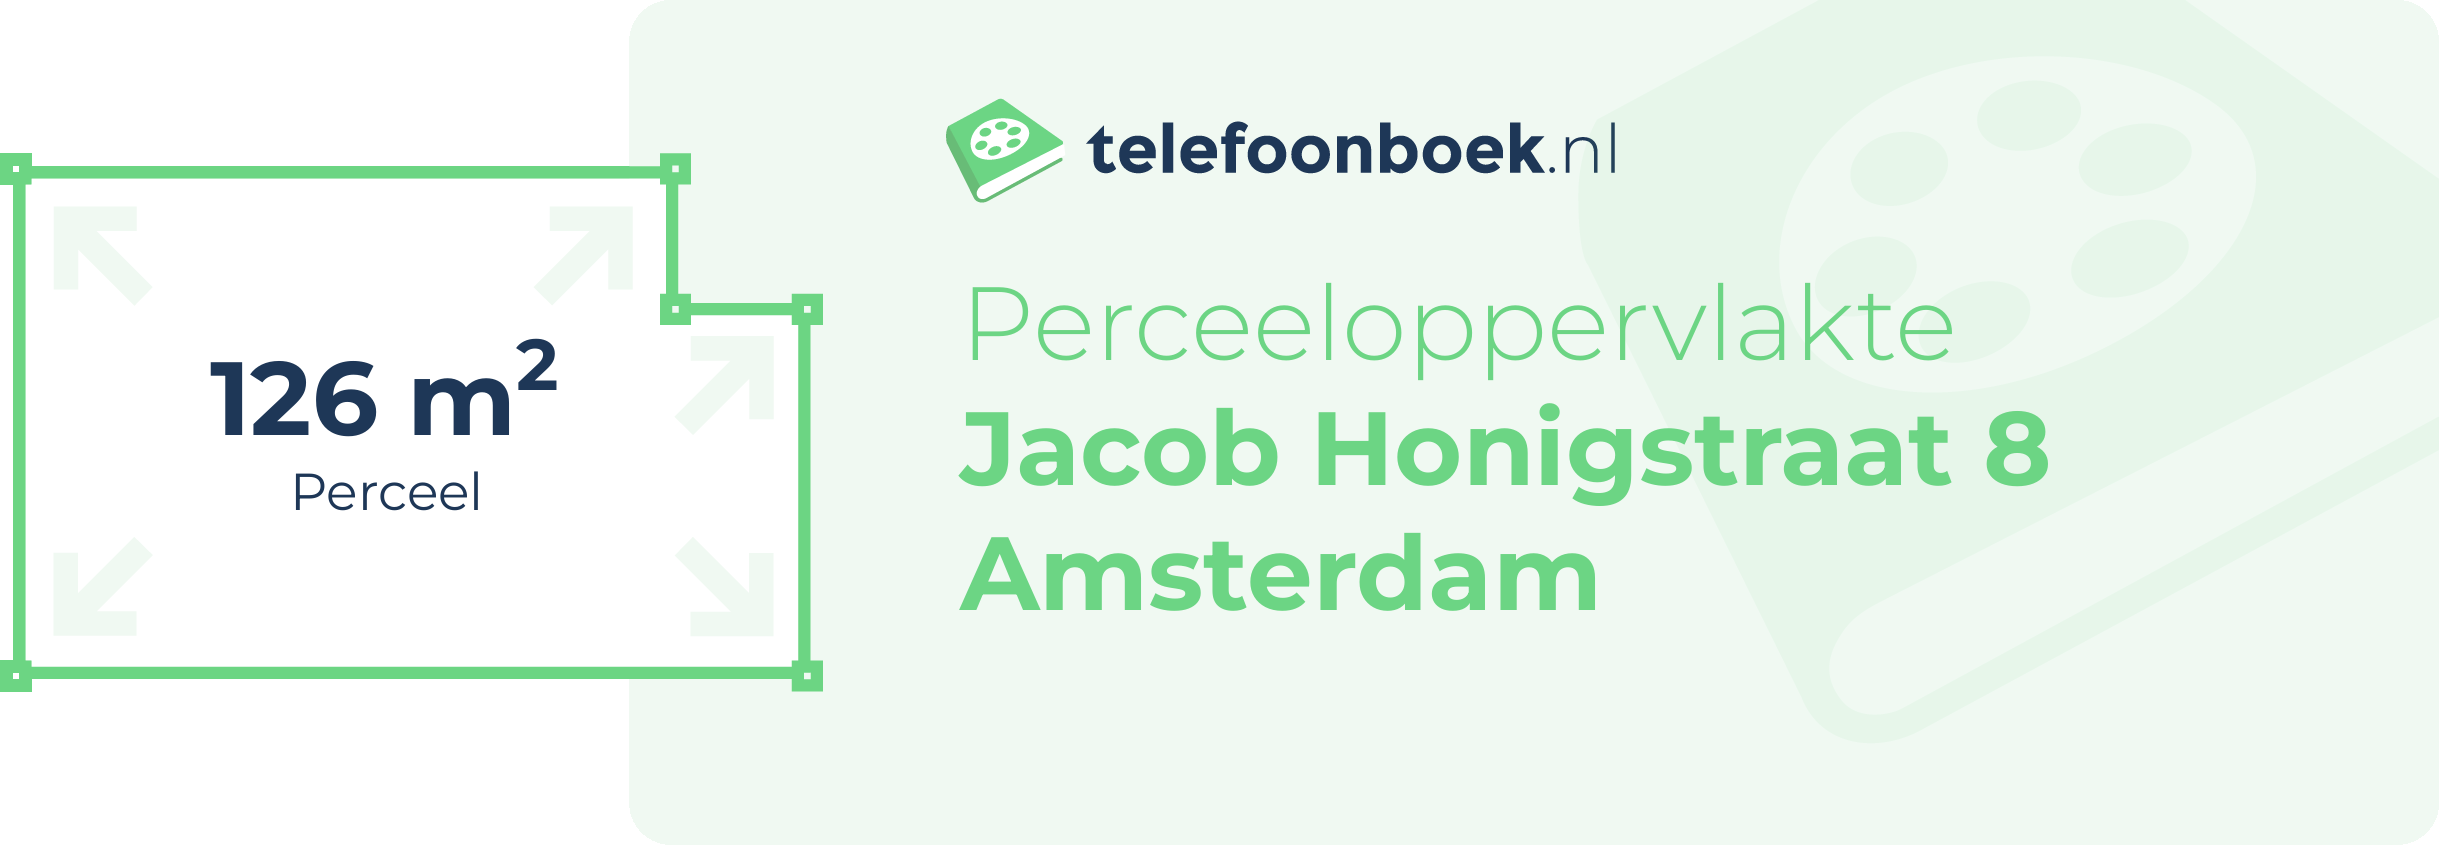 Perceeloppervlakte Jacob Honigstraat 8 Amsterdam